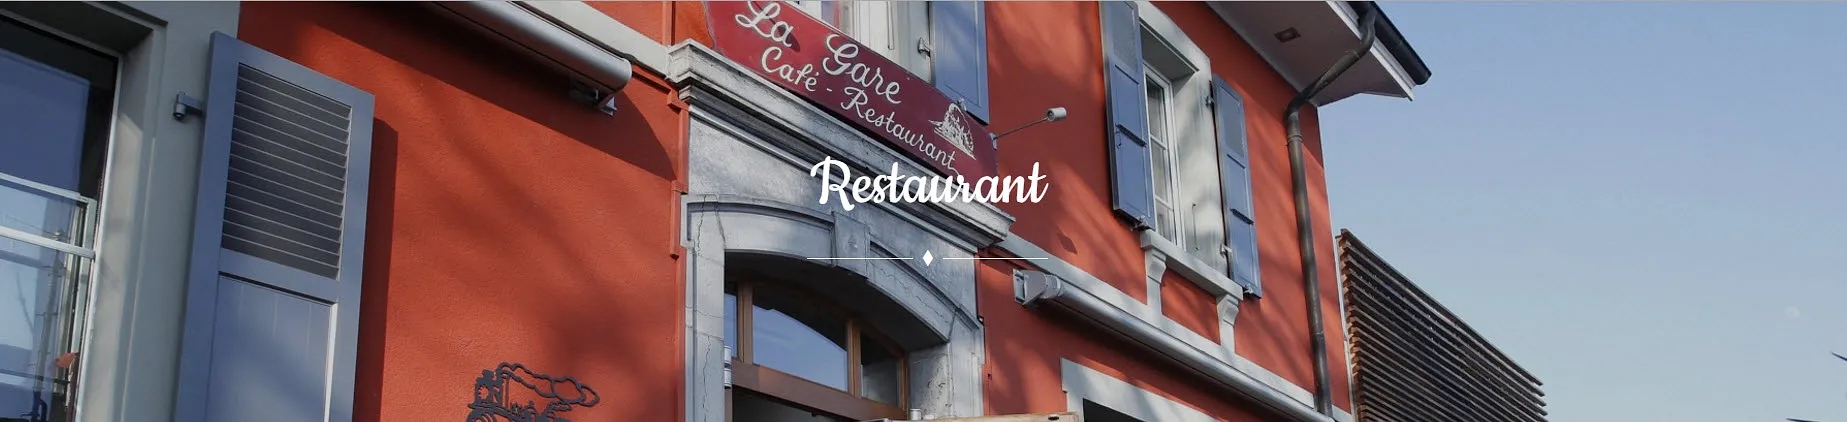 Café Restaurant la Gare